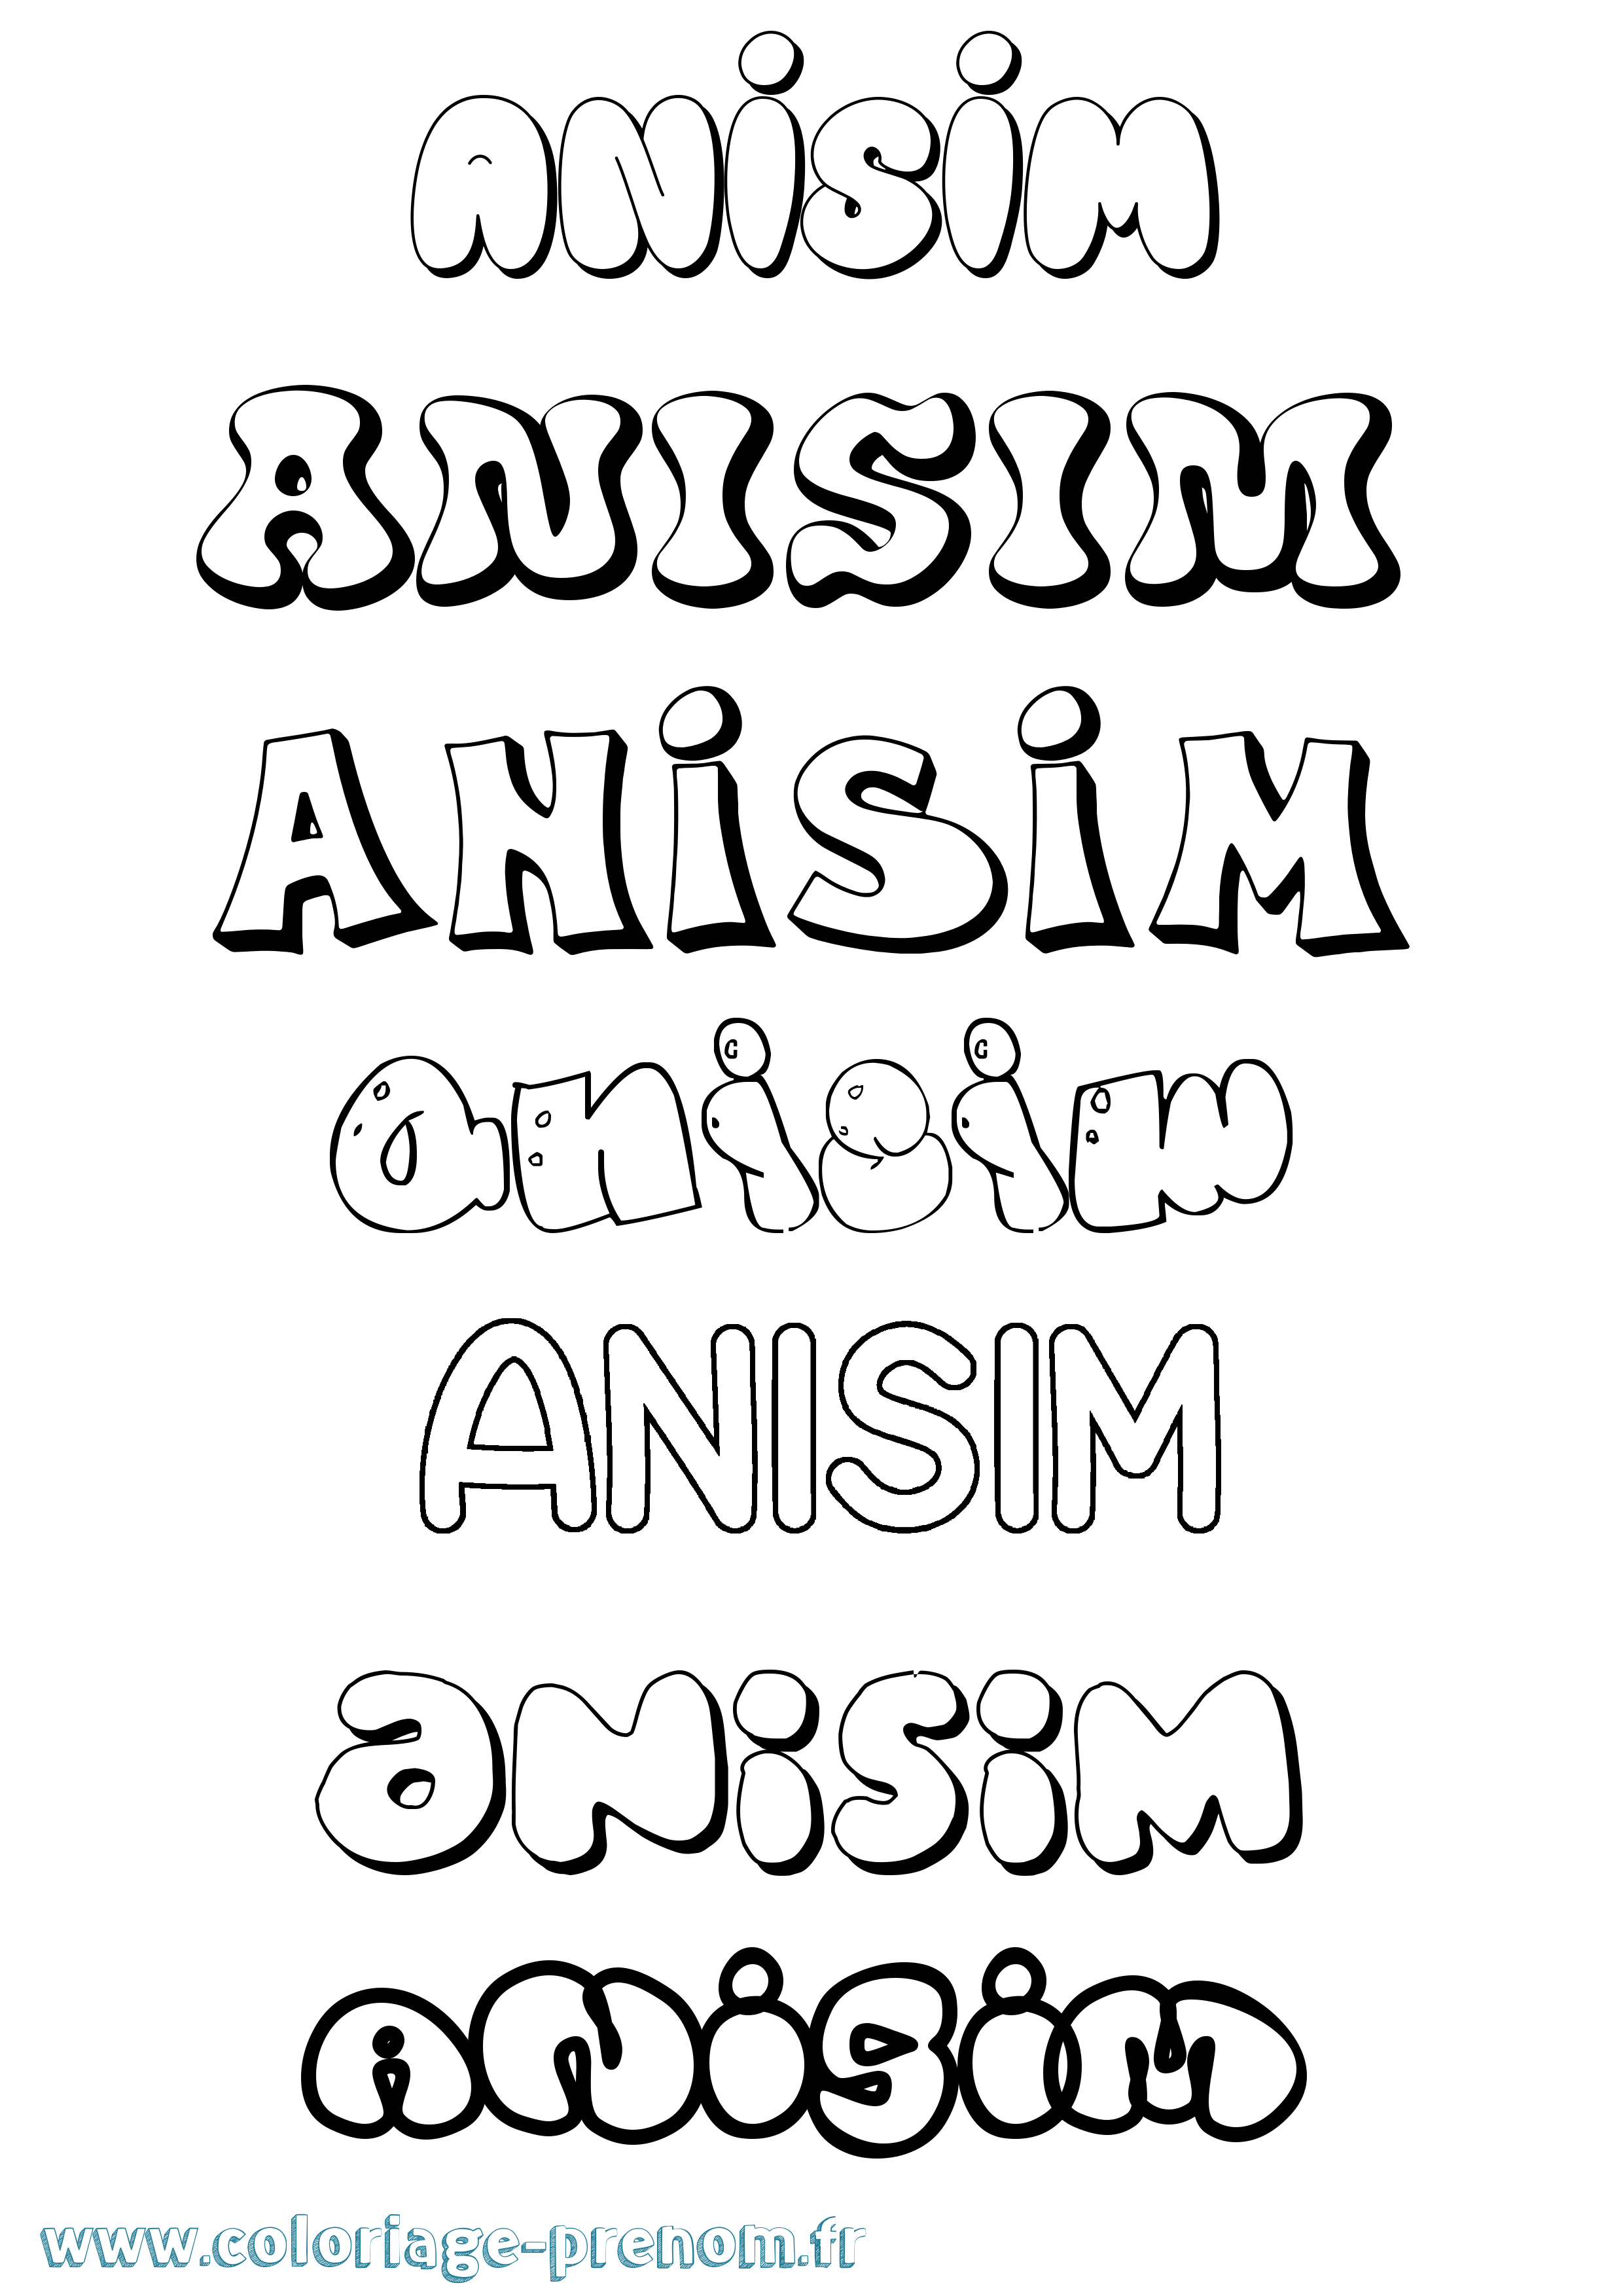 Coloriage prénom Anisim Bubble